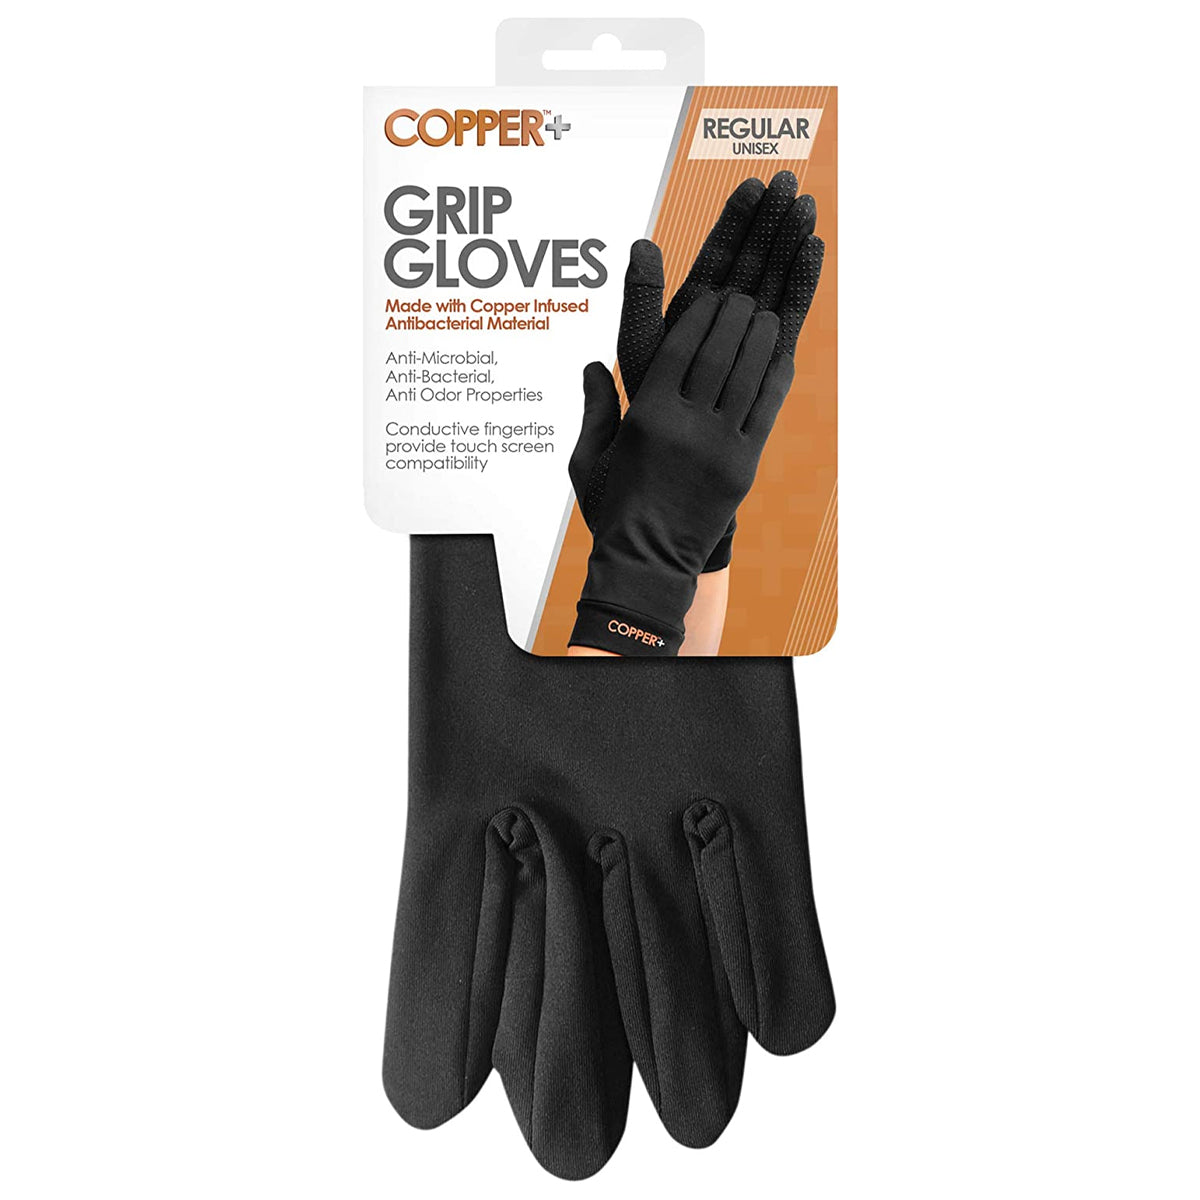 Copper+ Grip Gloves – Nonslip Textured, Touchscreen Compatible